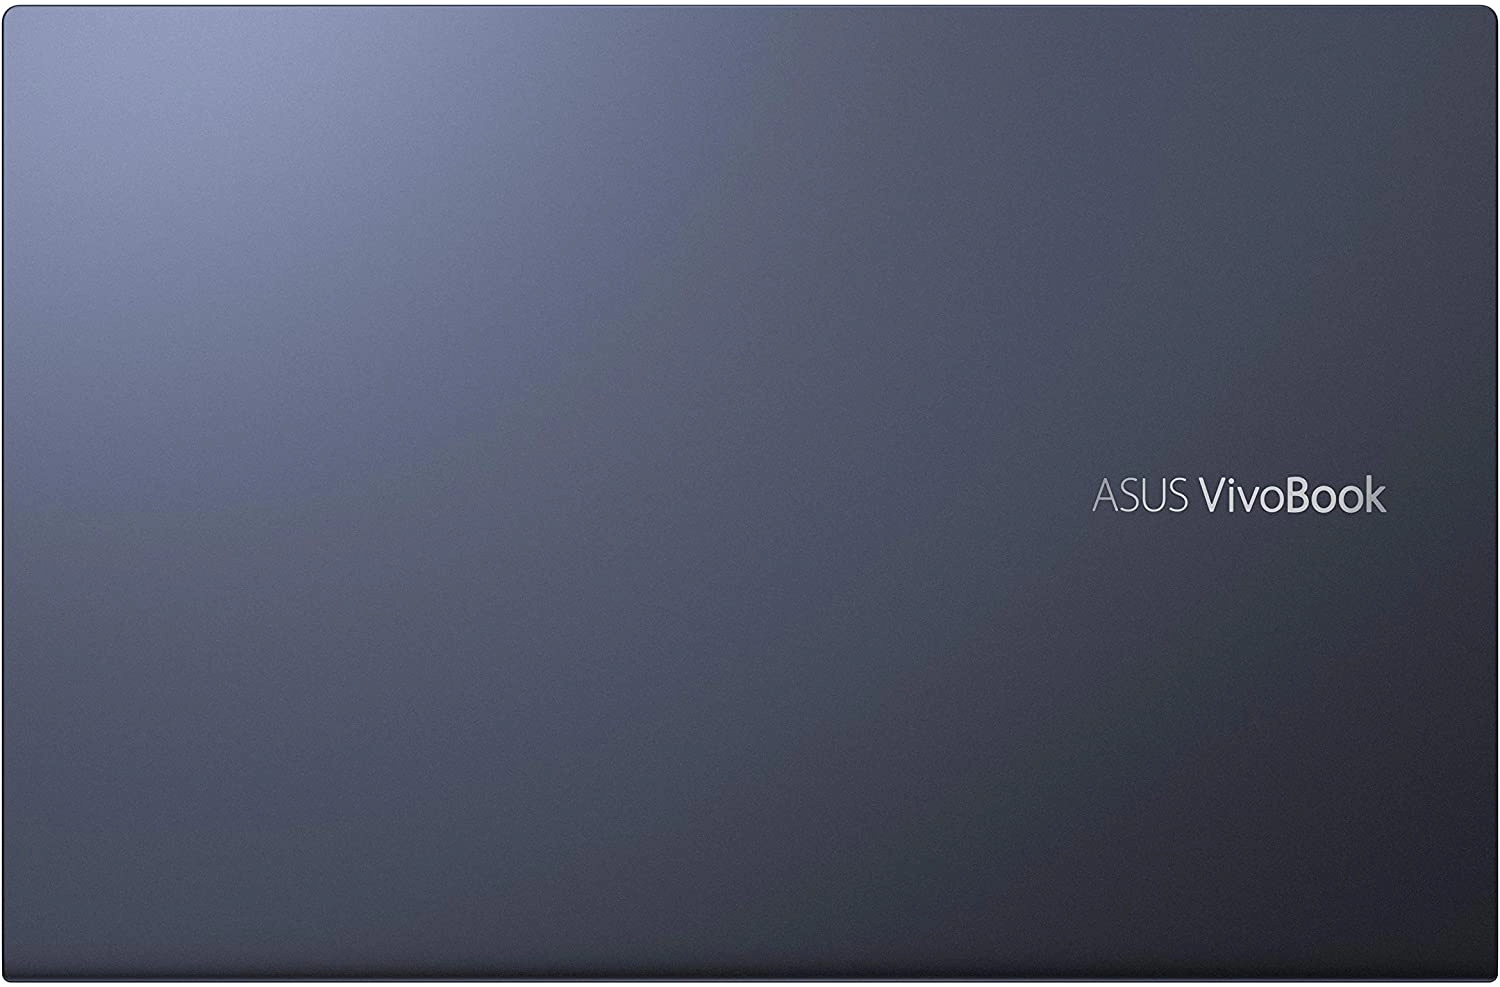 Asus K513EA-BQ158T laptop image